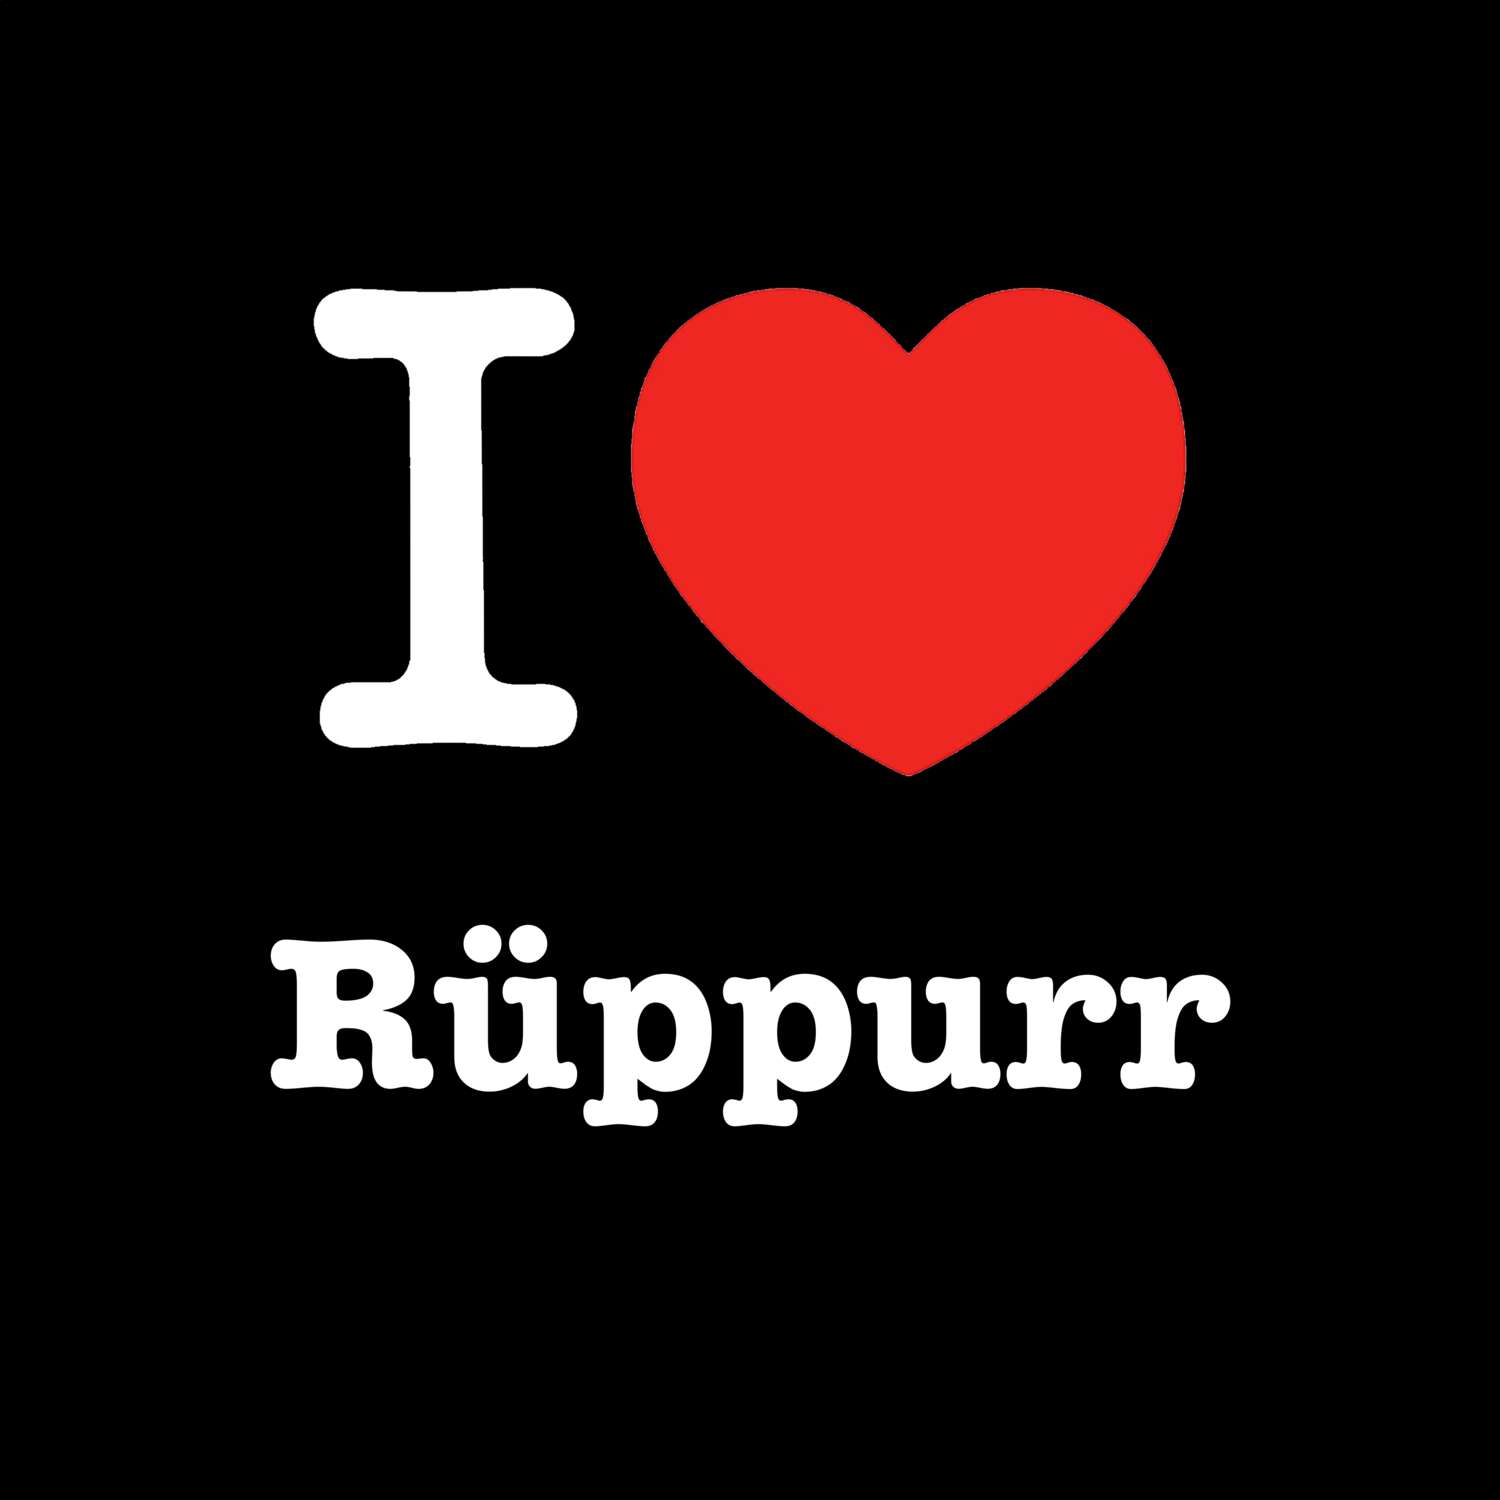 Rüppurr T-Shirt »I love«